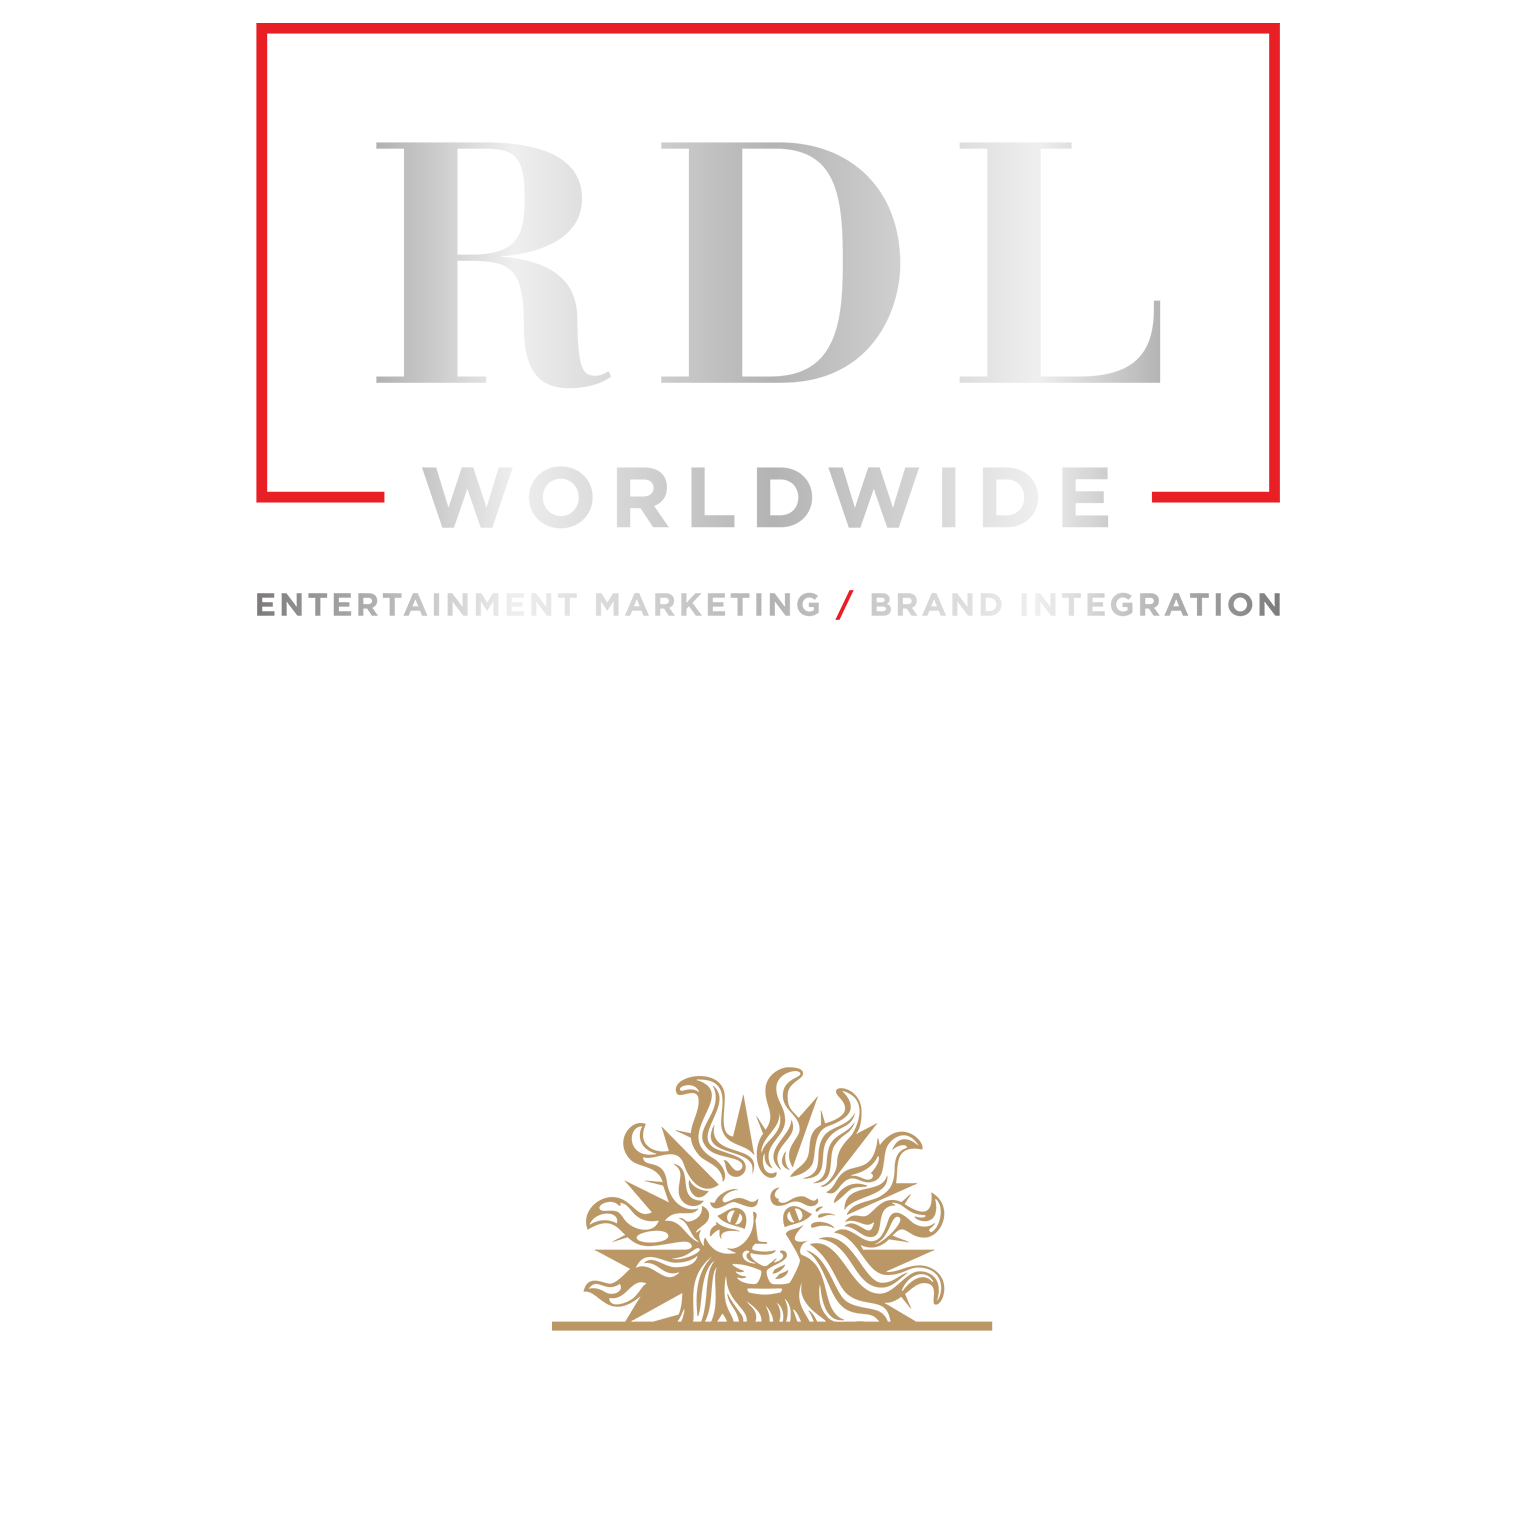 RDL worldwide